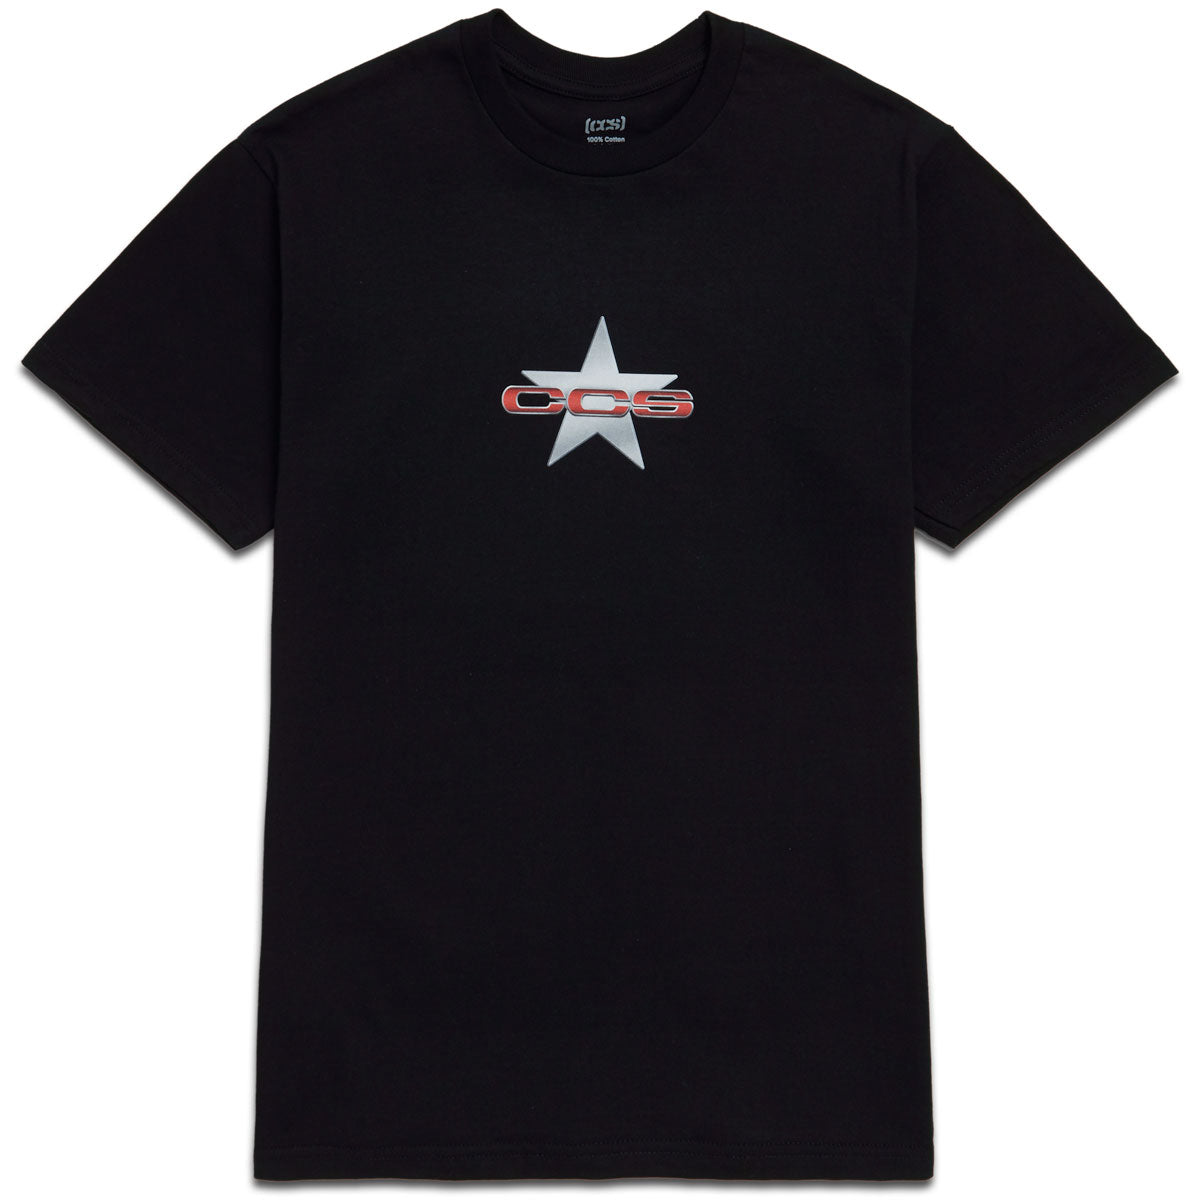 CCS 97 Star T-Shirt - Black - MD image 1